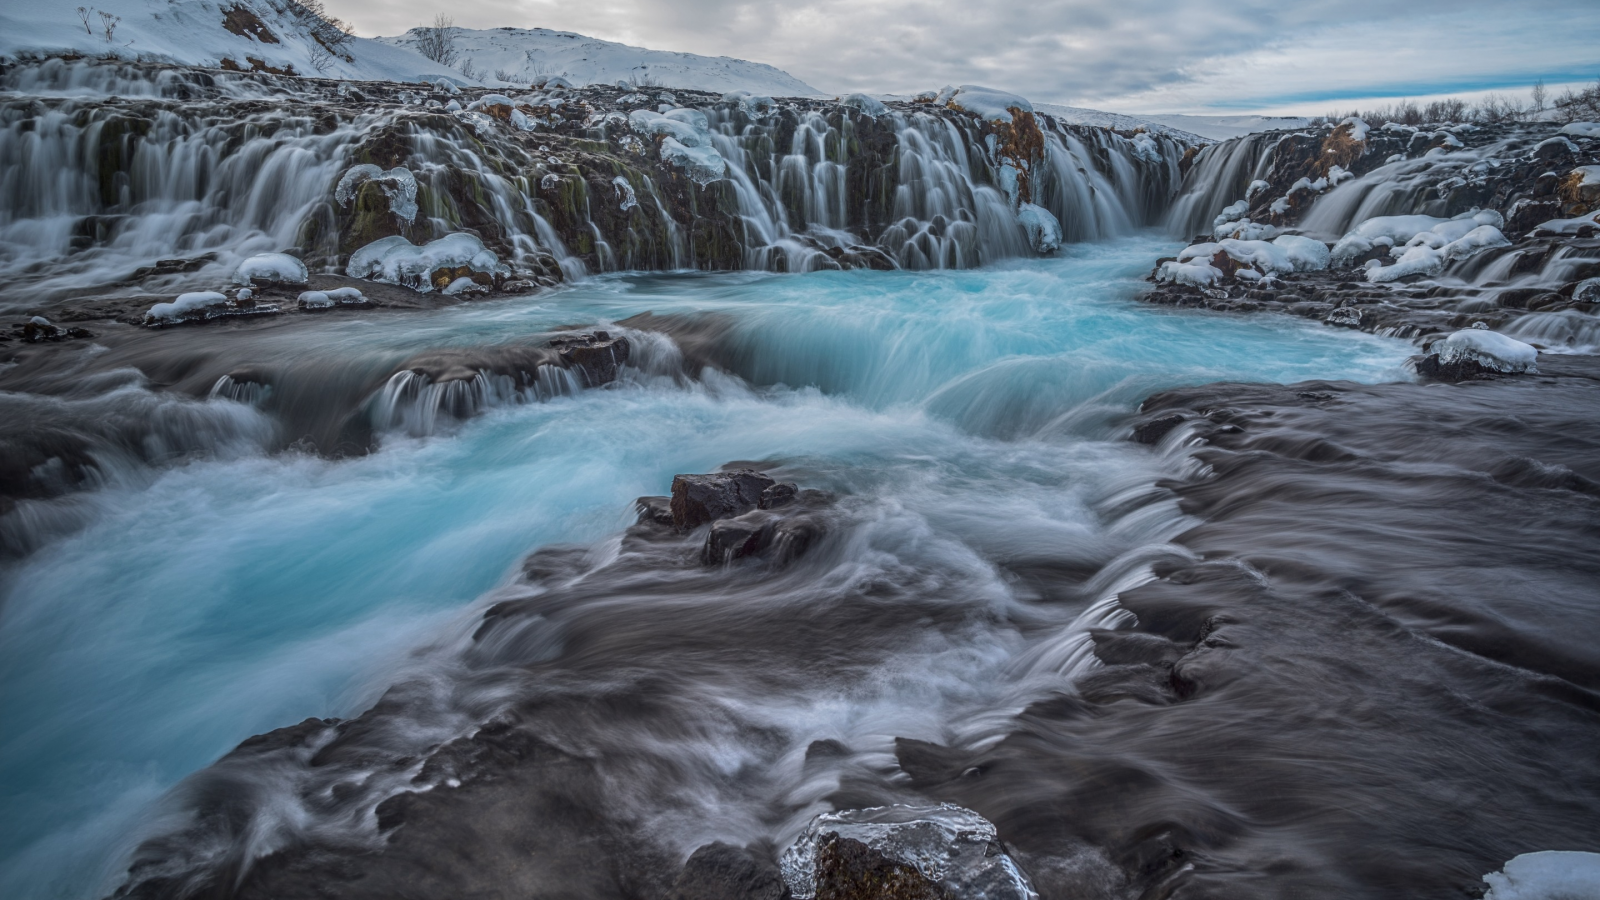 Iceland, Исландия, водопад, поток, скалы, камни, облака, природа, пейзаж